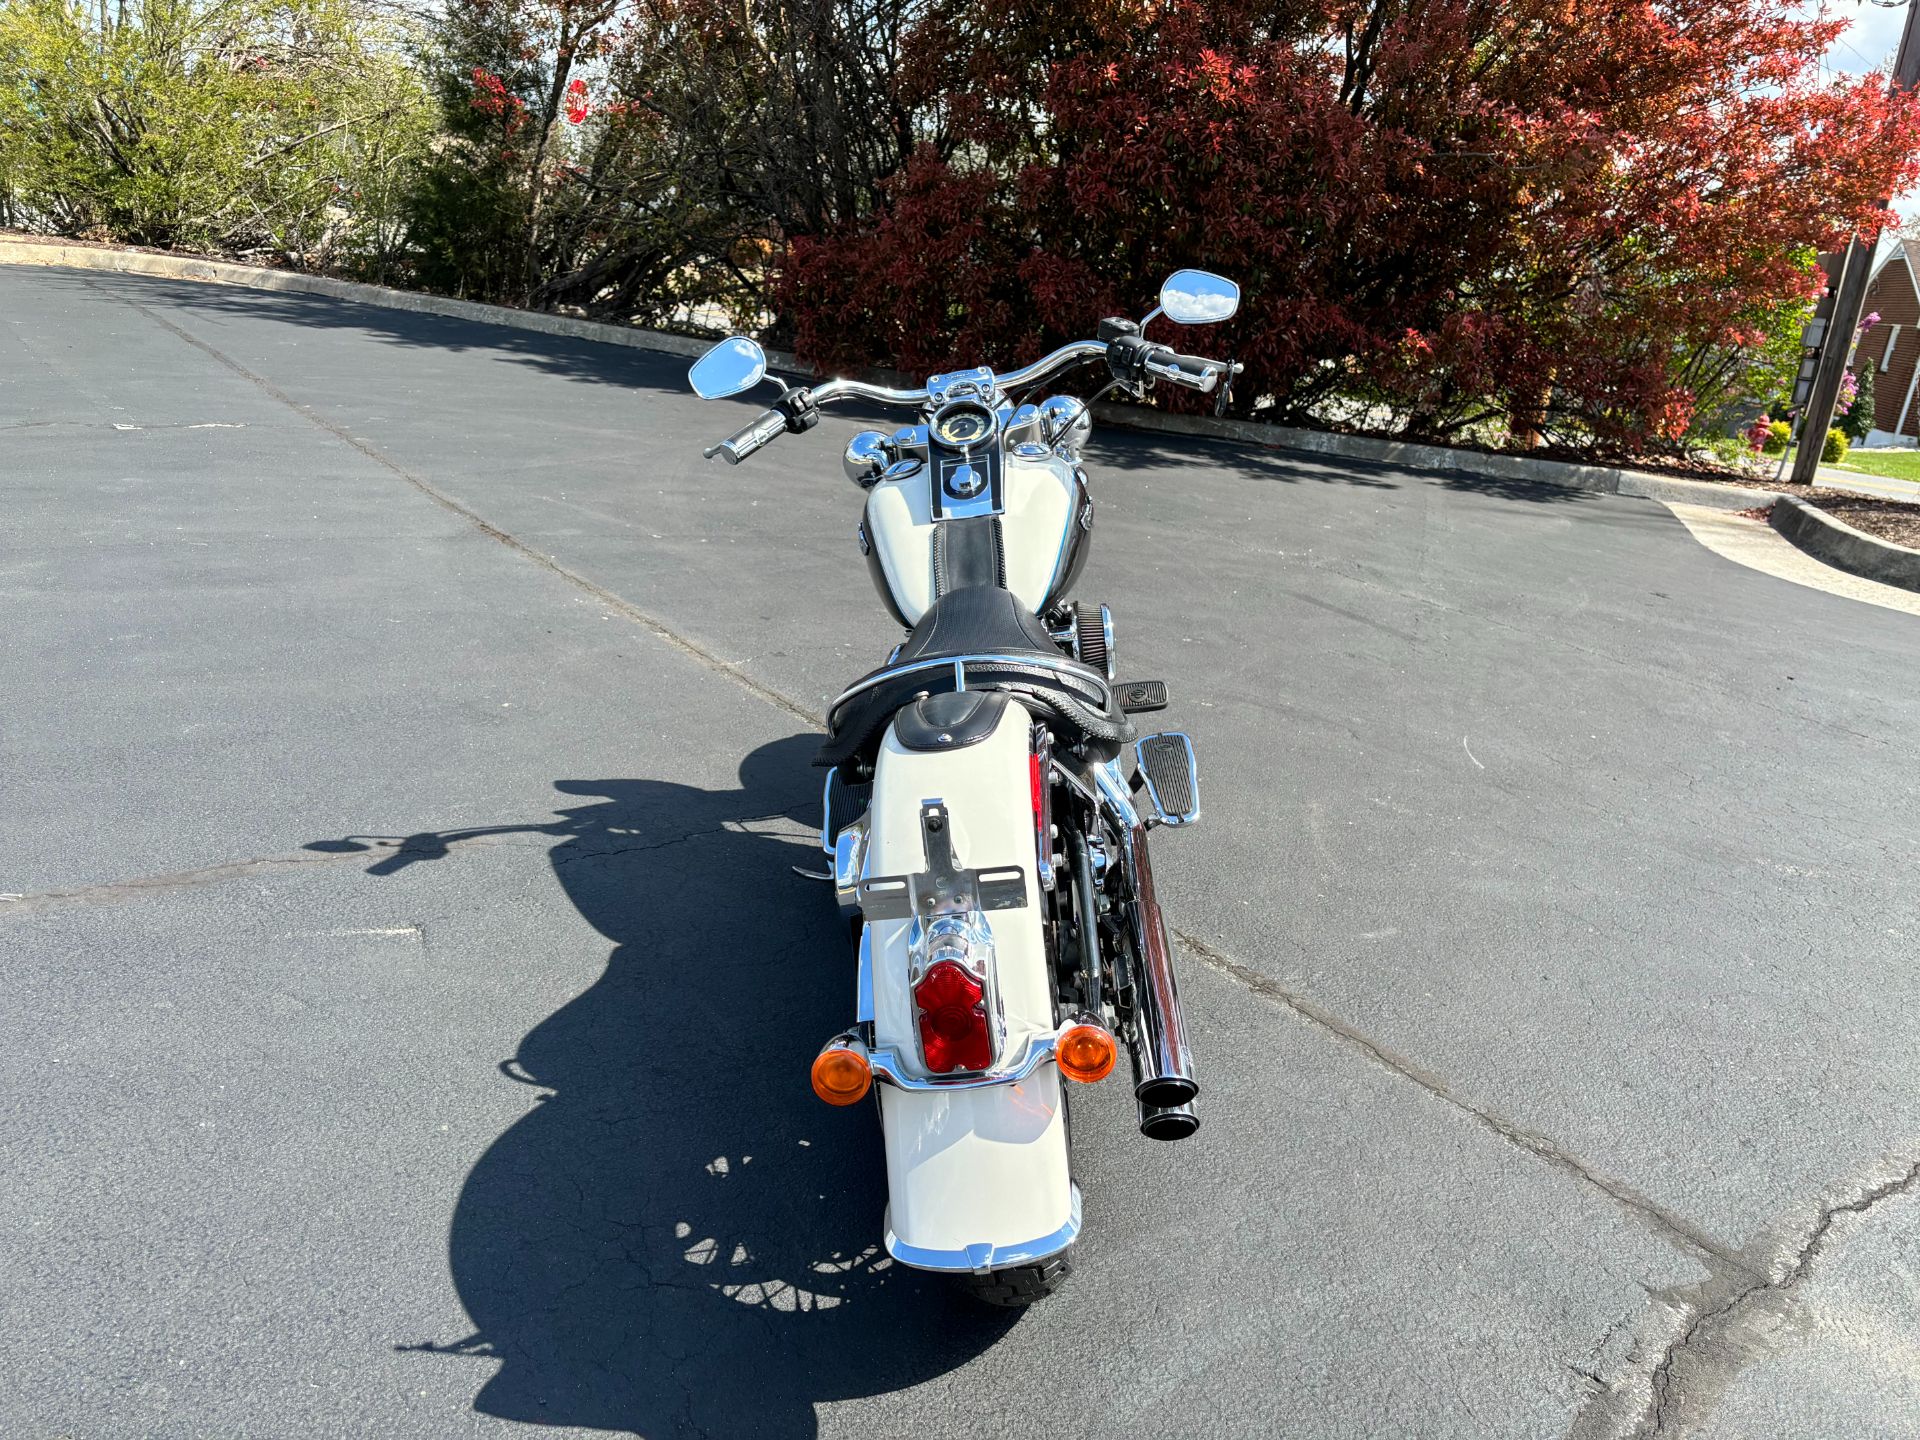 2013 Harley-Davidson Softail® Deluxe in Lynchburg, Virginia - Photo 6